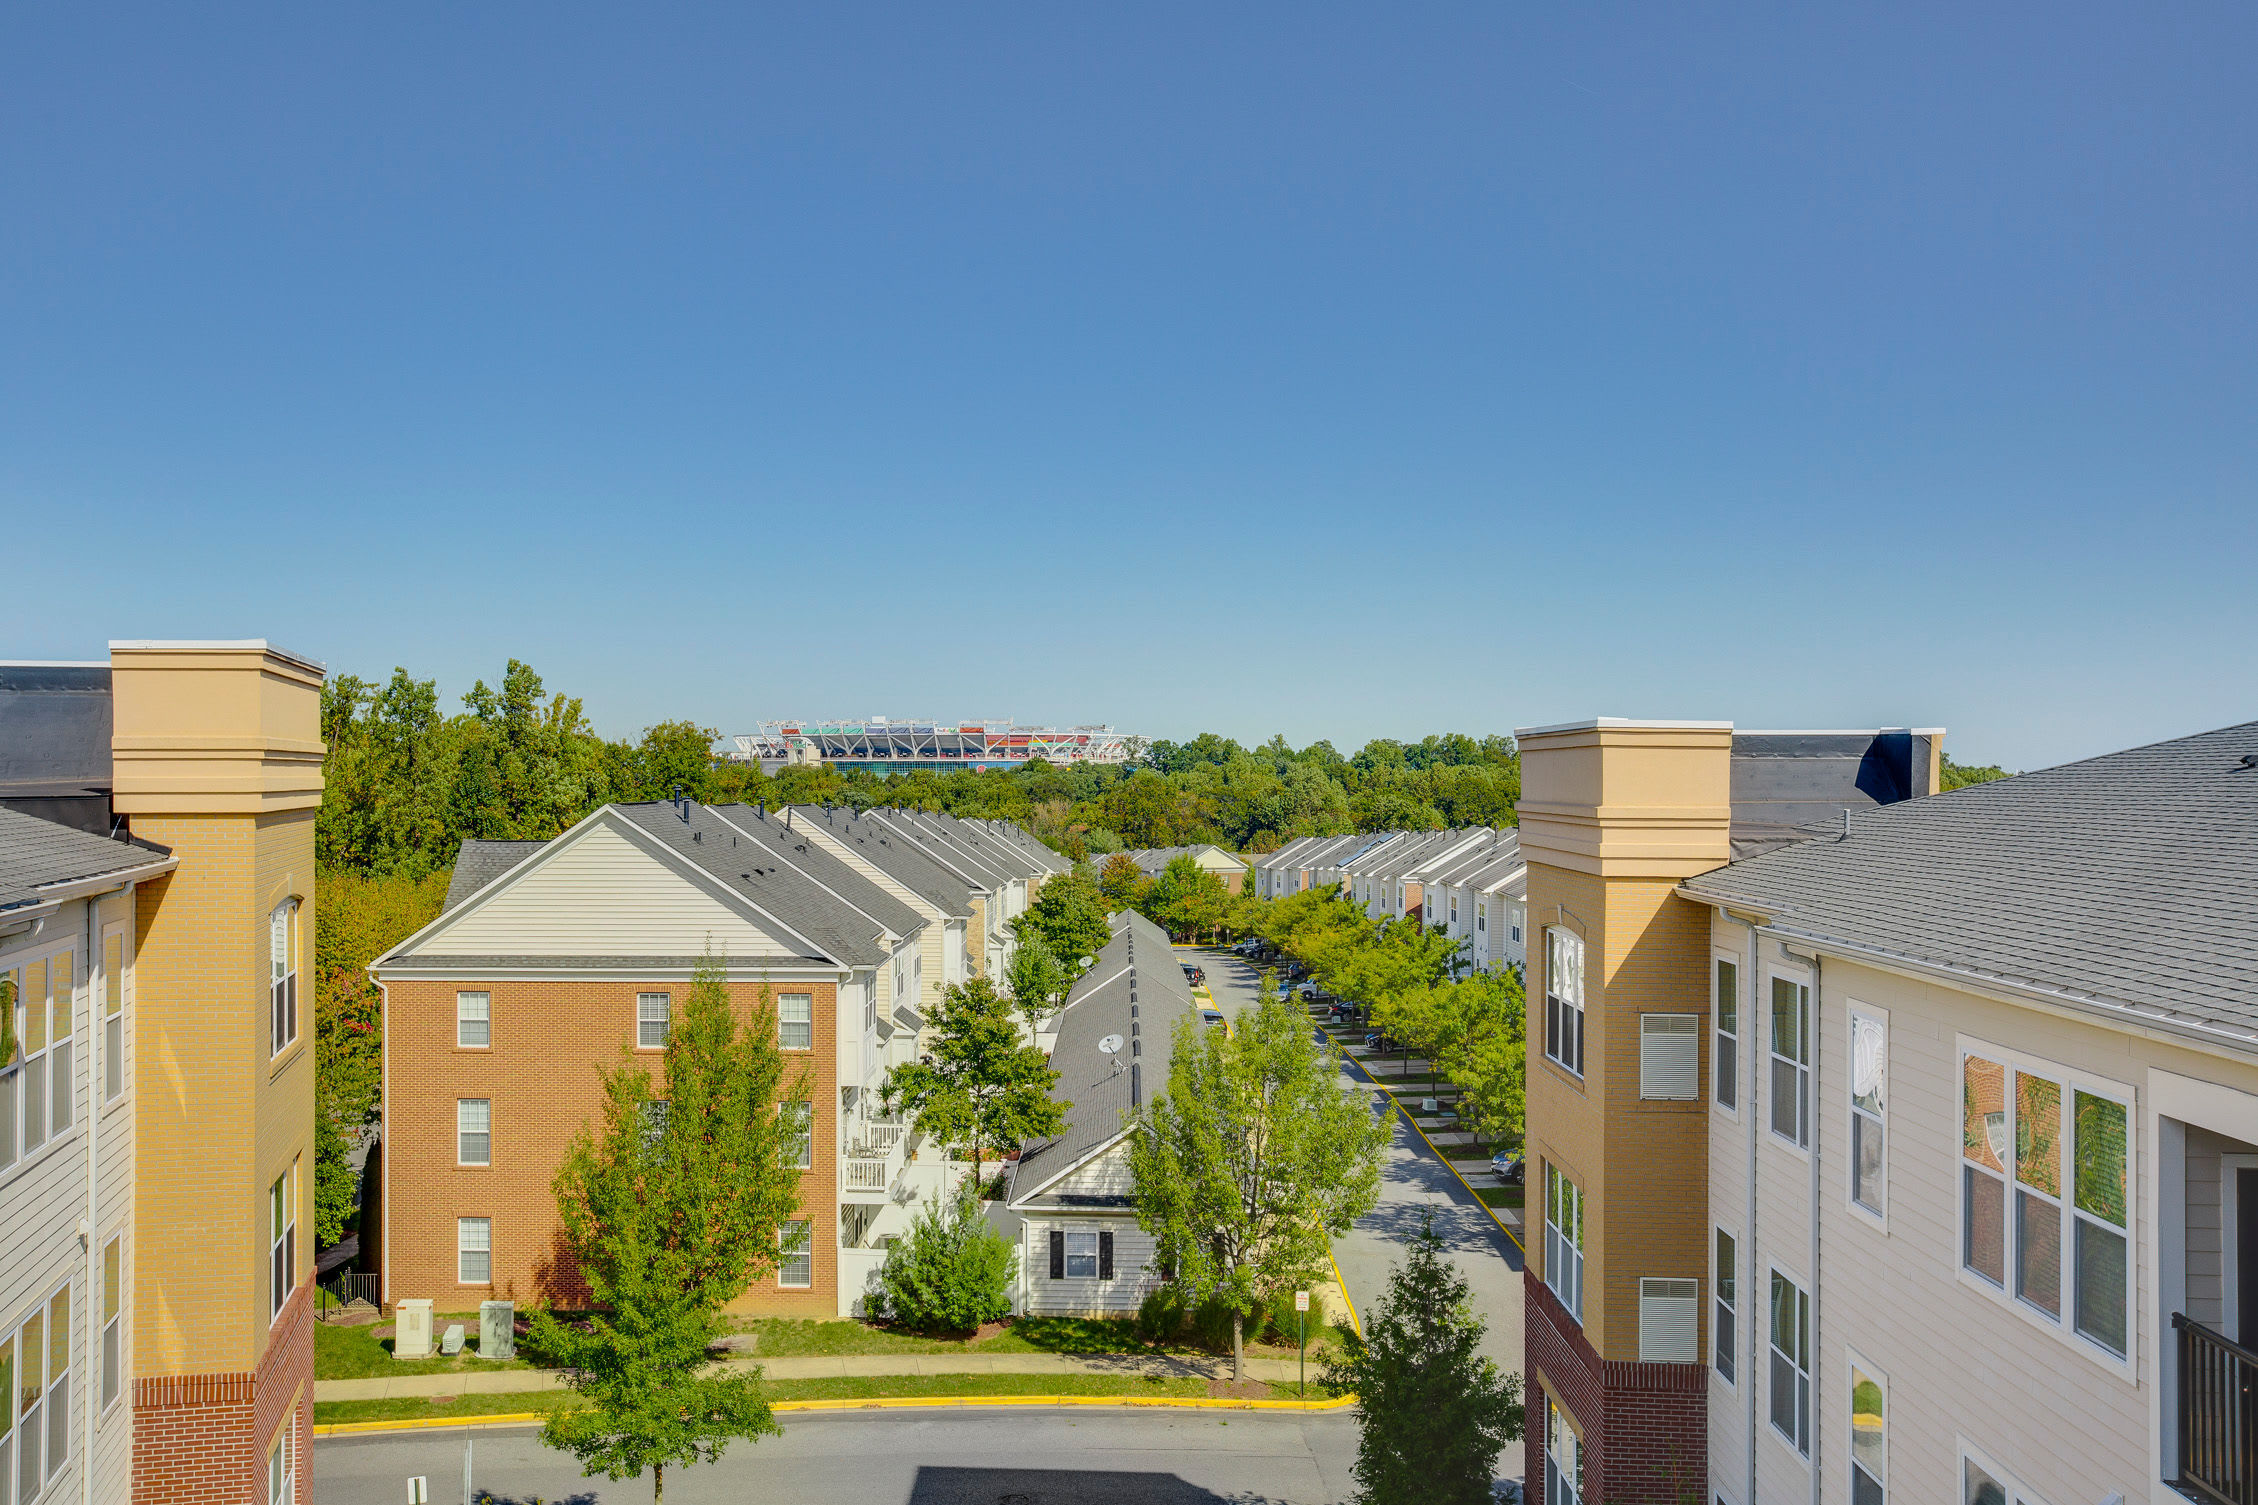 Arial view of the neighborhood by Summerfield at Morgan Metro in Hyattsville, Maryland